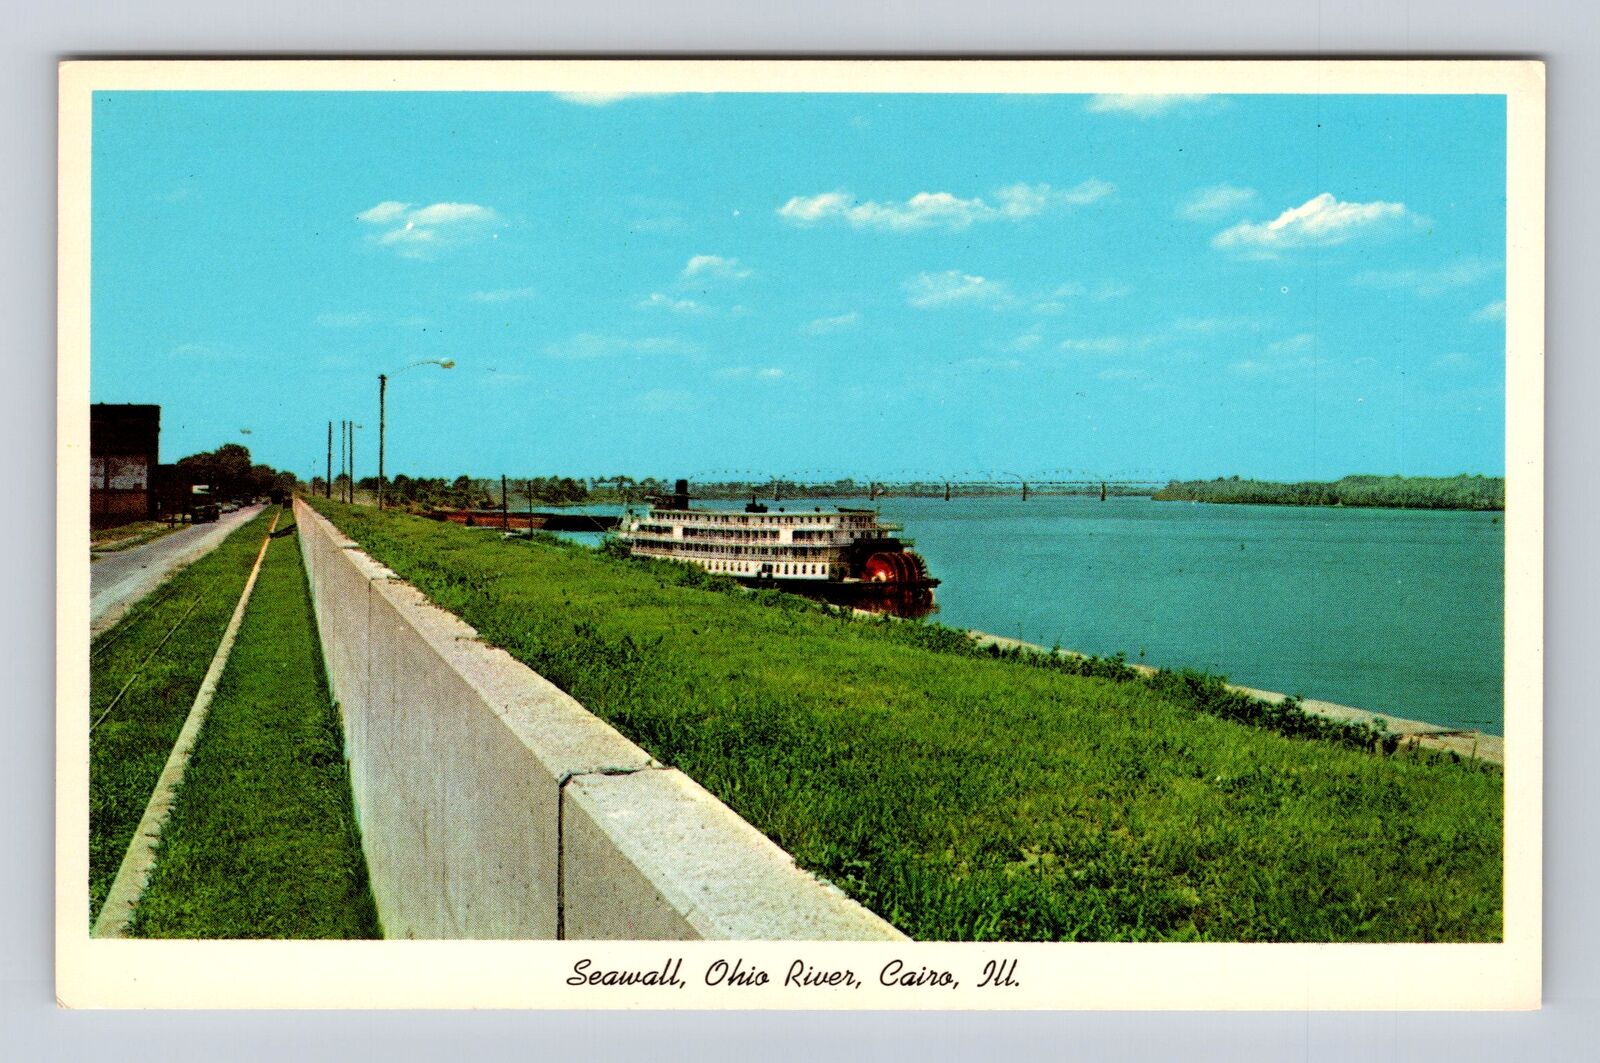 Cairo IL-Illinois, Seawall, Ohio River, Antique, Vintage Souvenir Postcard